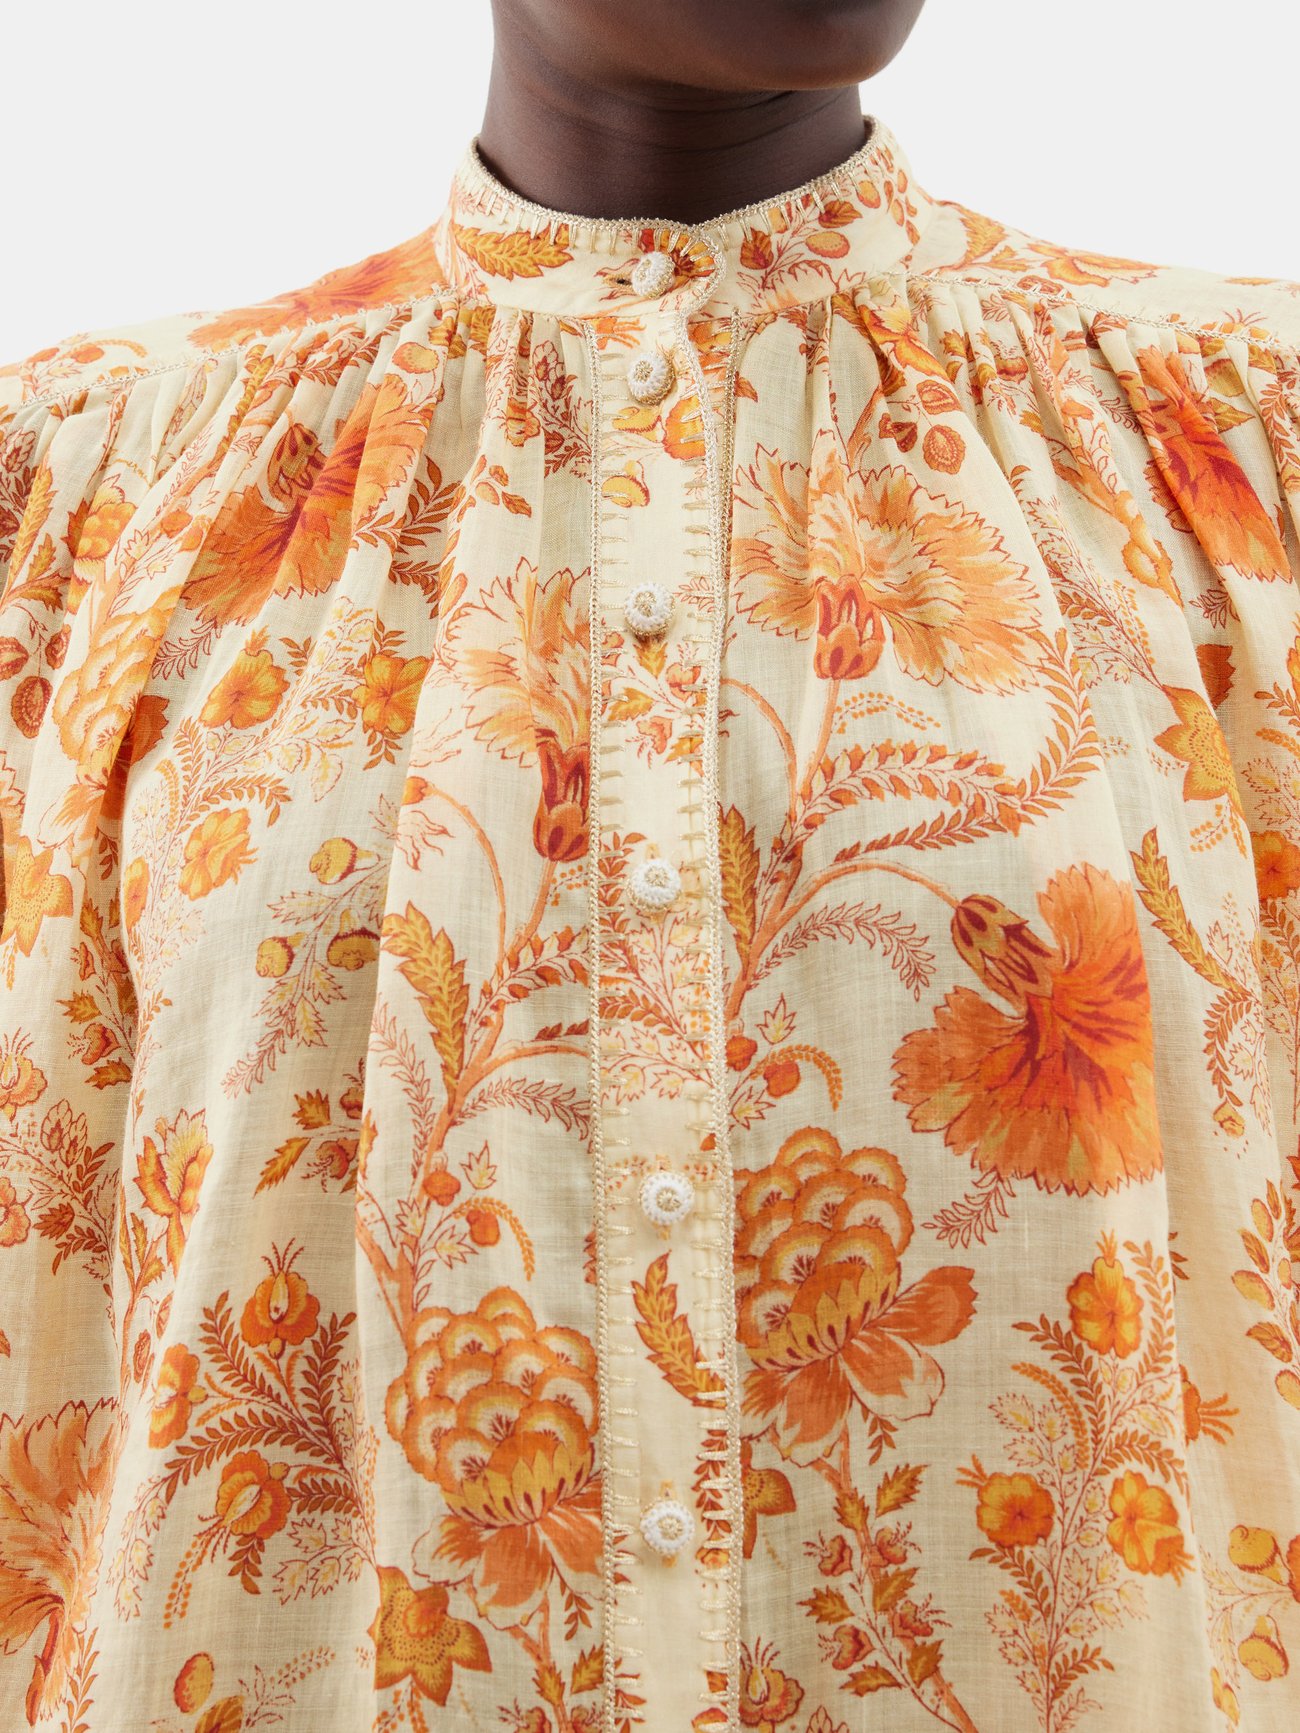 ZIMMERMANN Kids patchwork floral-print blouse - Neutrals